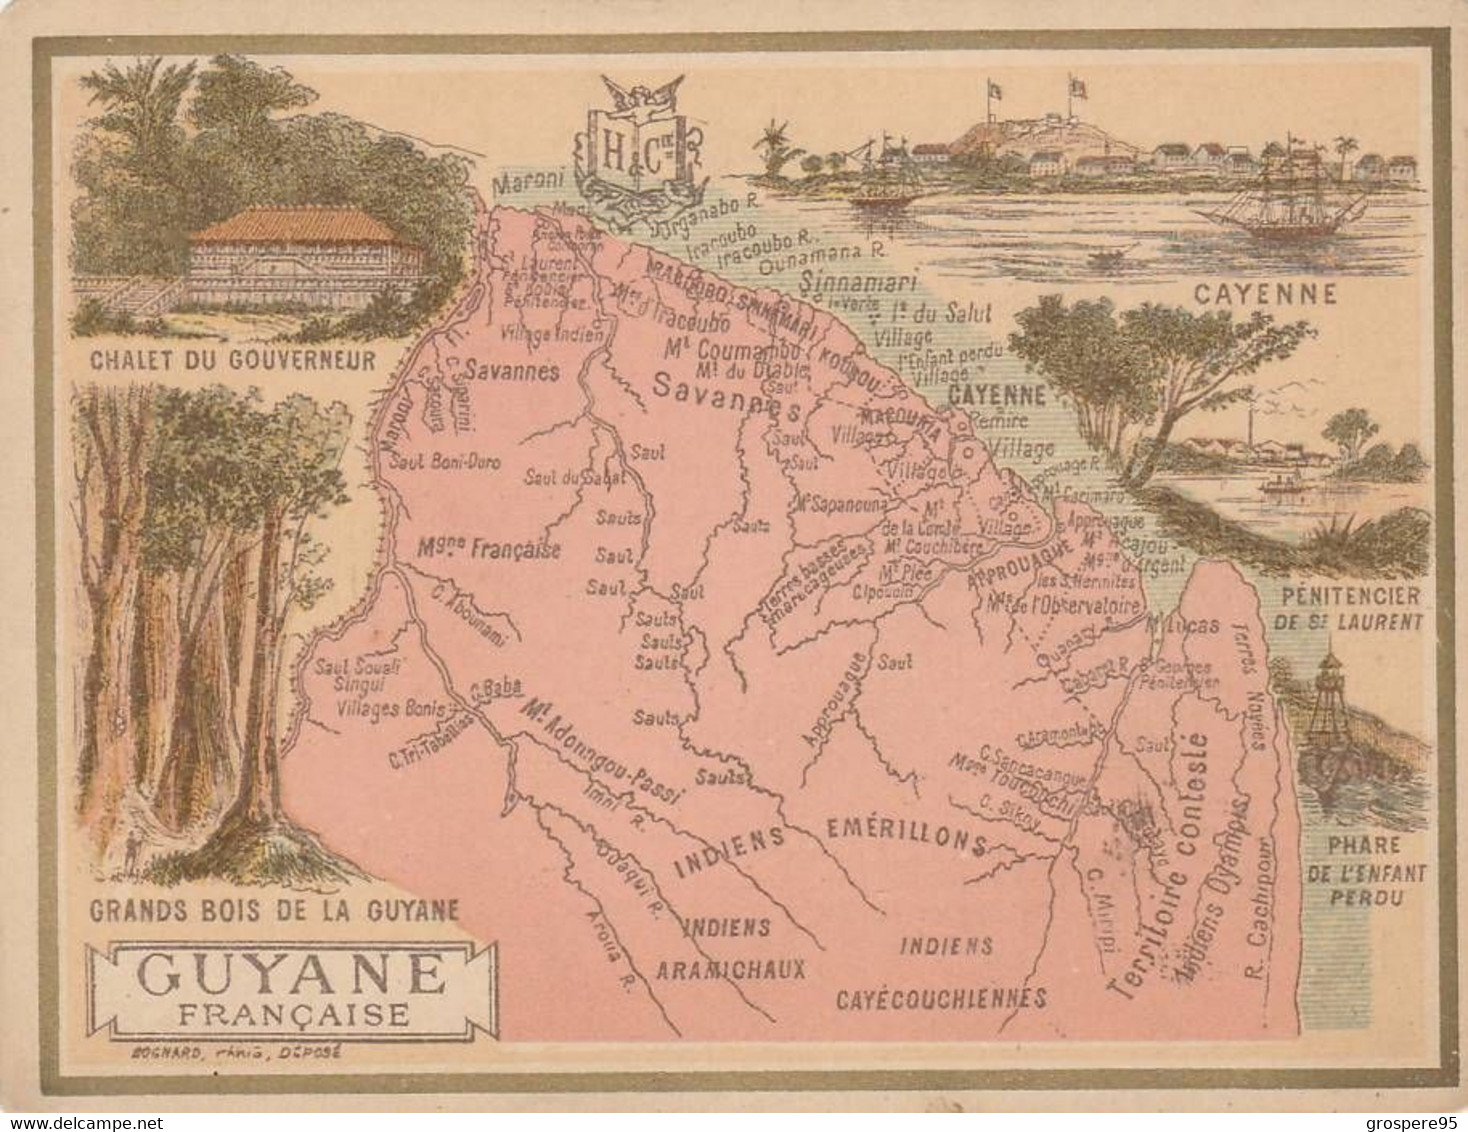 GUYANE FRANCAISE H LEMONNIER ET FR SCHRADER LIBRAIRIE HACHETTE - Geographical Maps